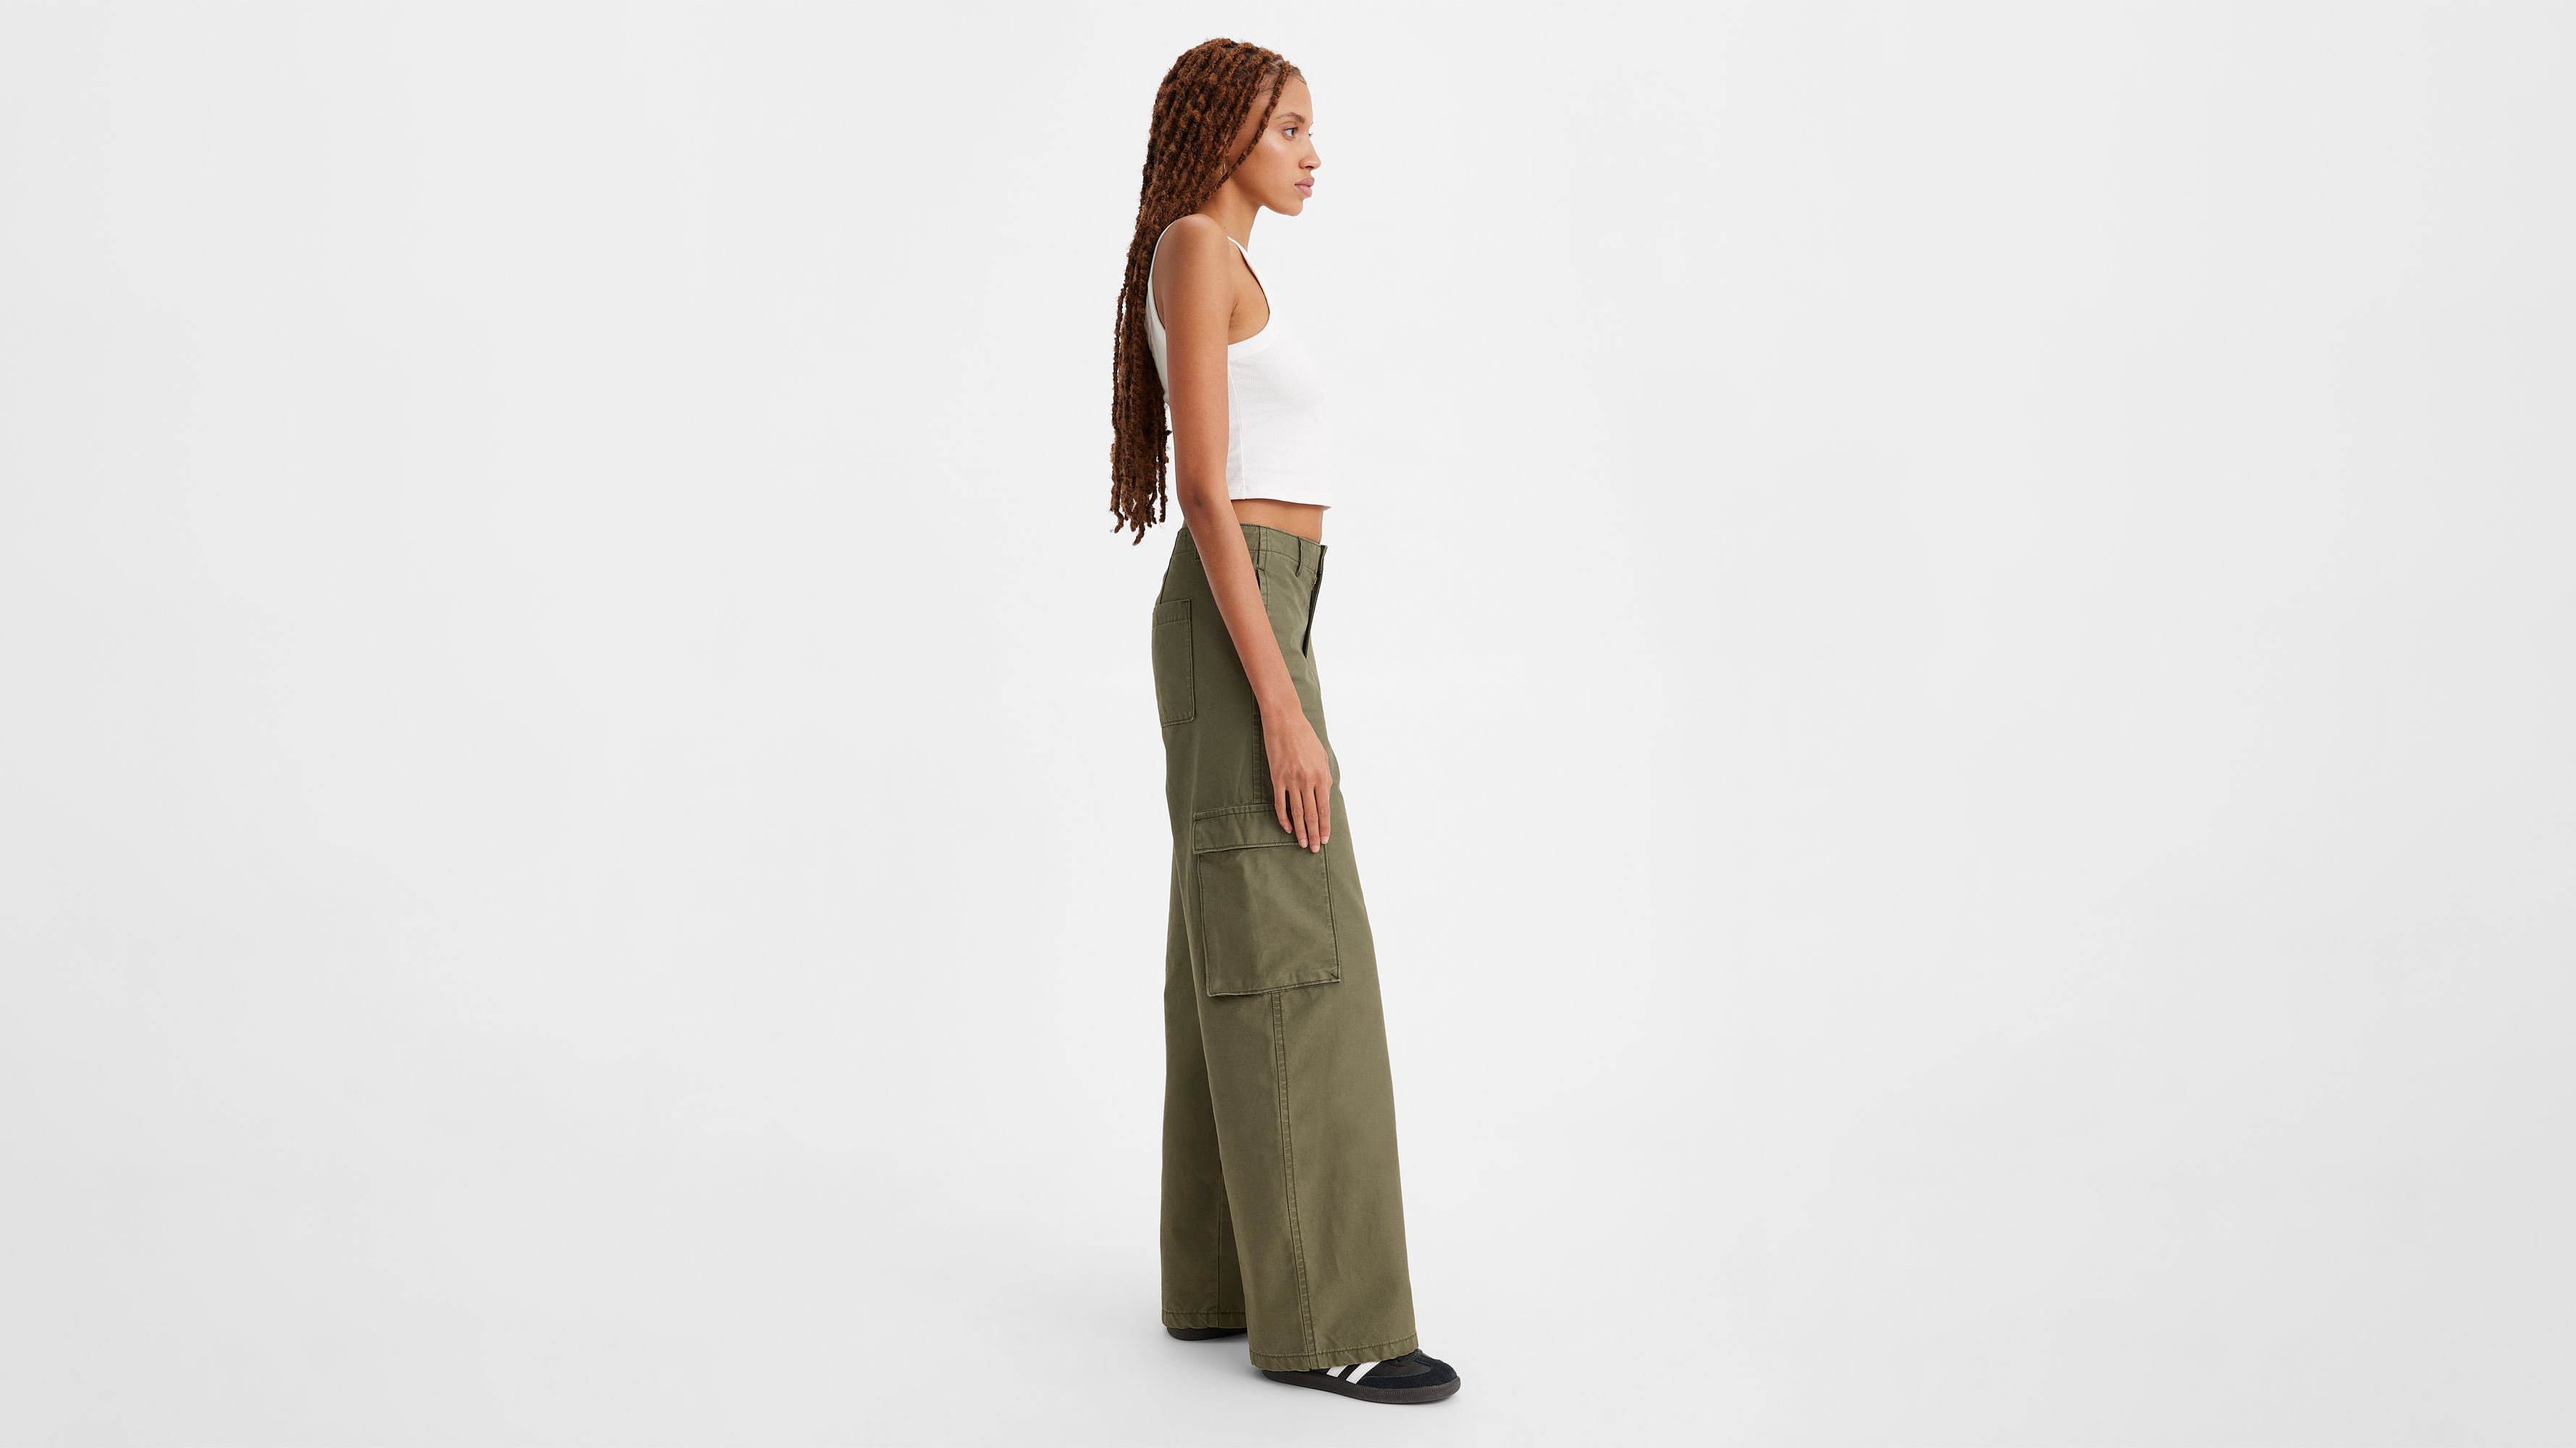 Cabi Jean Celadon Cargo Skinny Pants Womens 6 Green Six Pocket